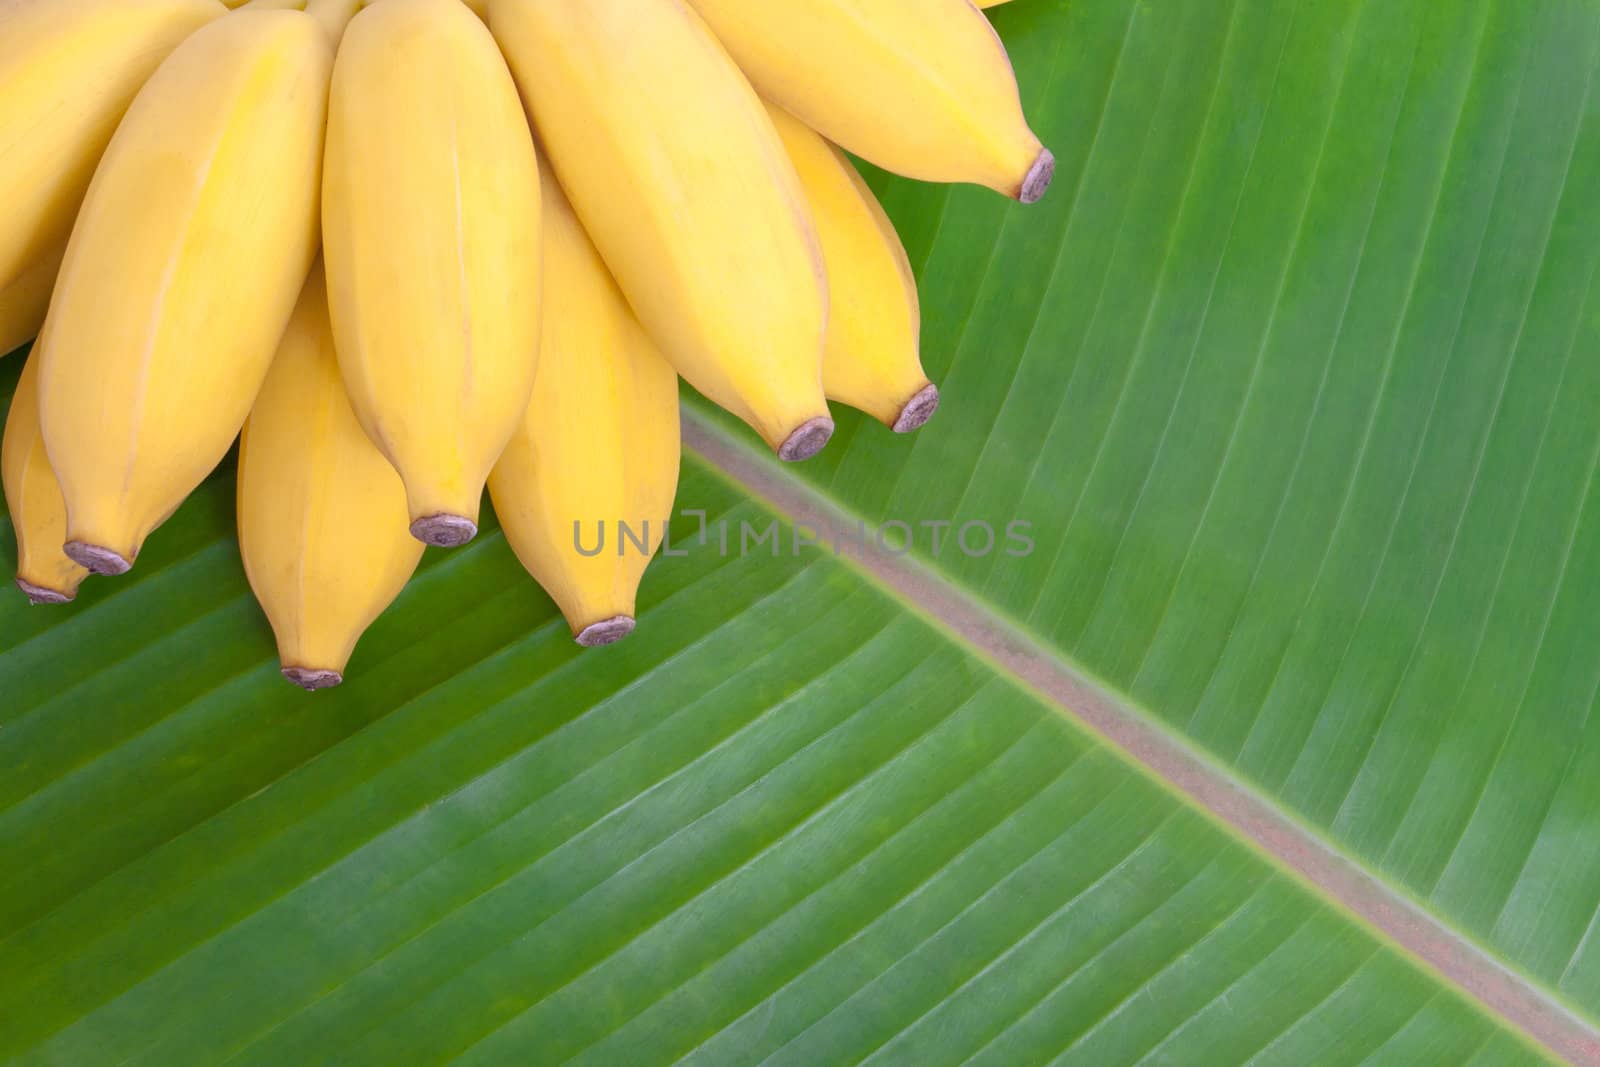 Bunch of bananas by pierivb